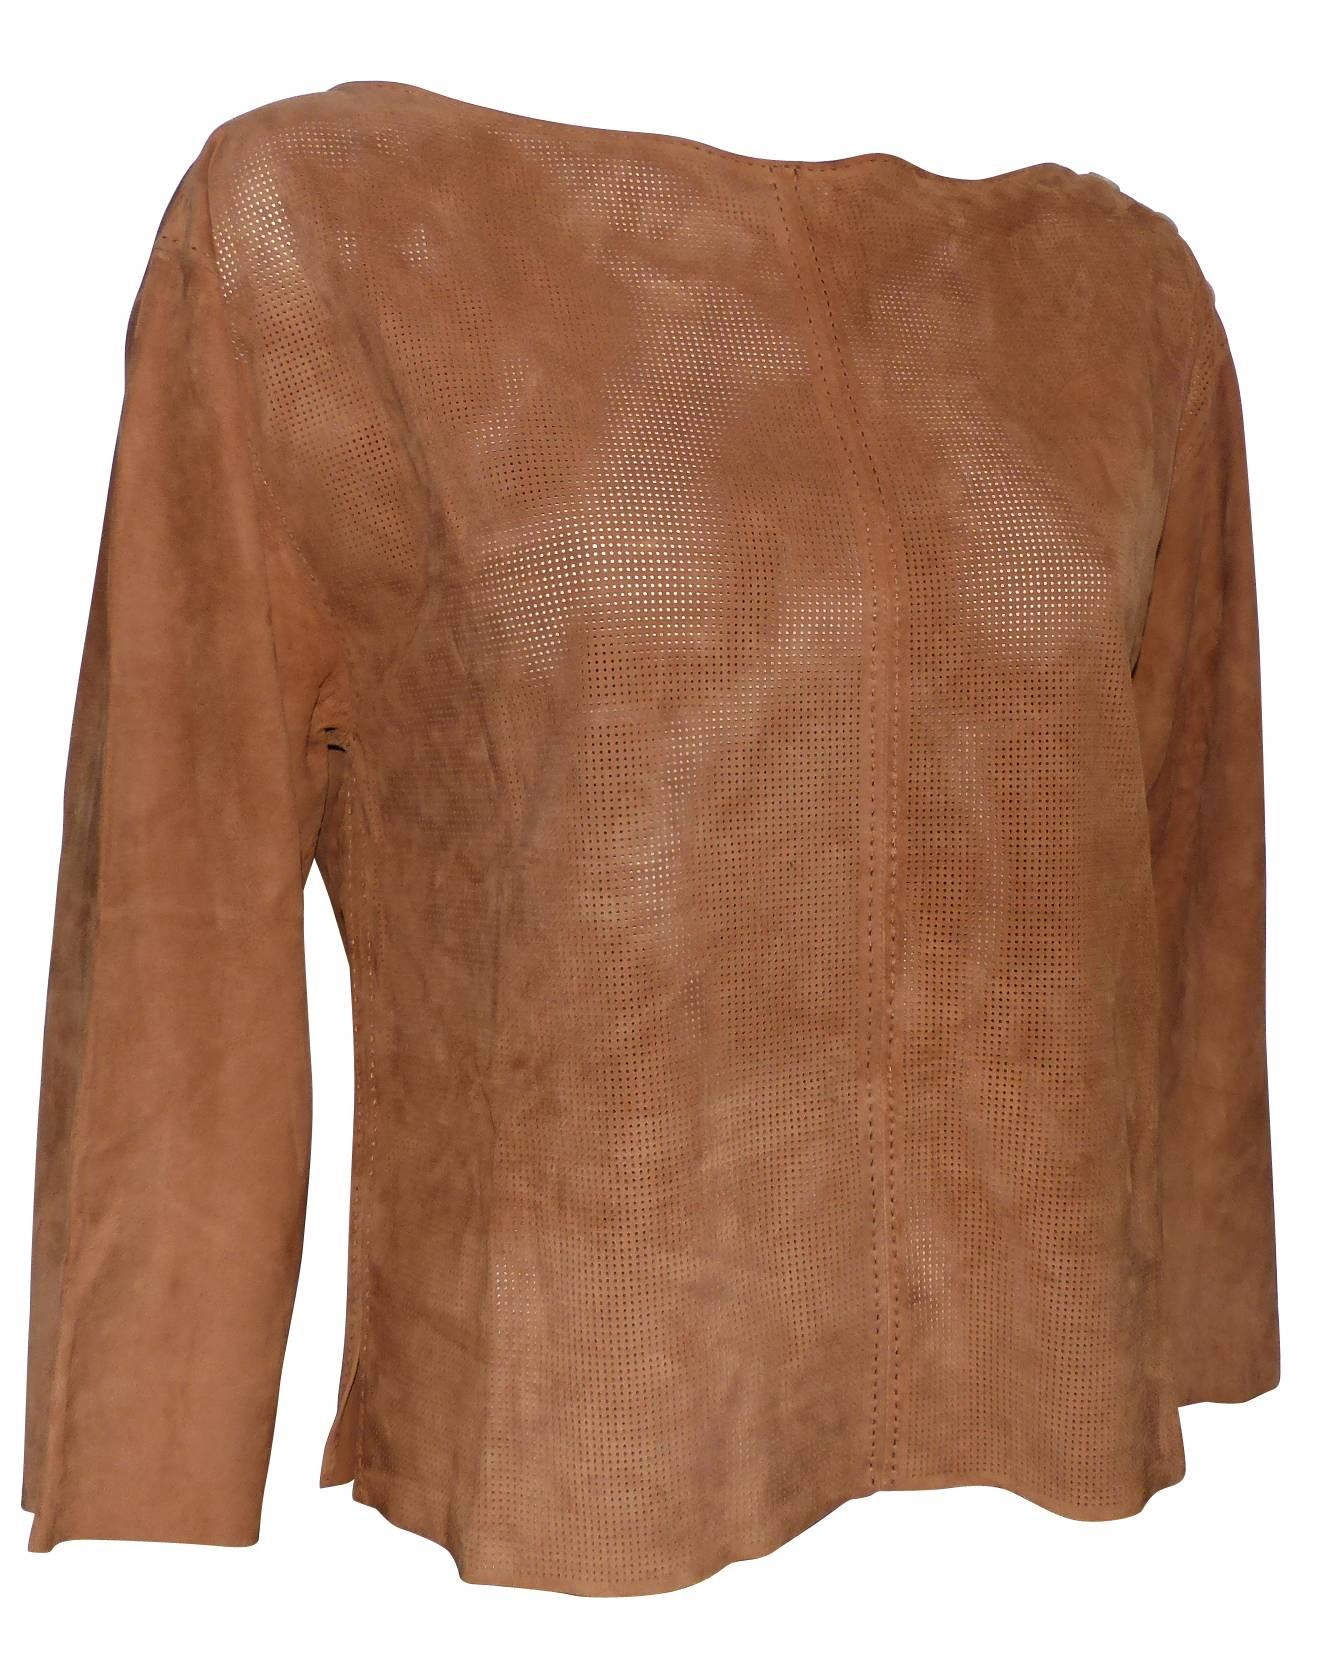 Women's Gorgeous Hermès Tunique Perforated Brown Suede / EXCELLENTE CONDITION 